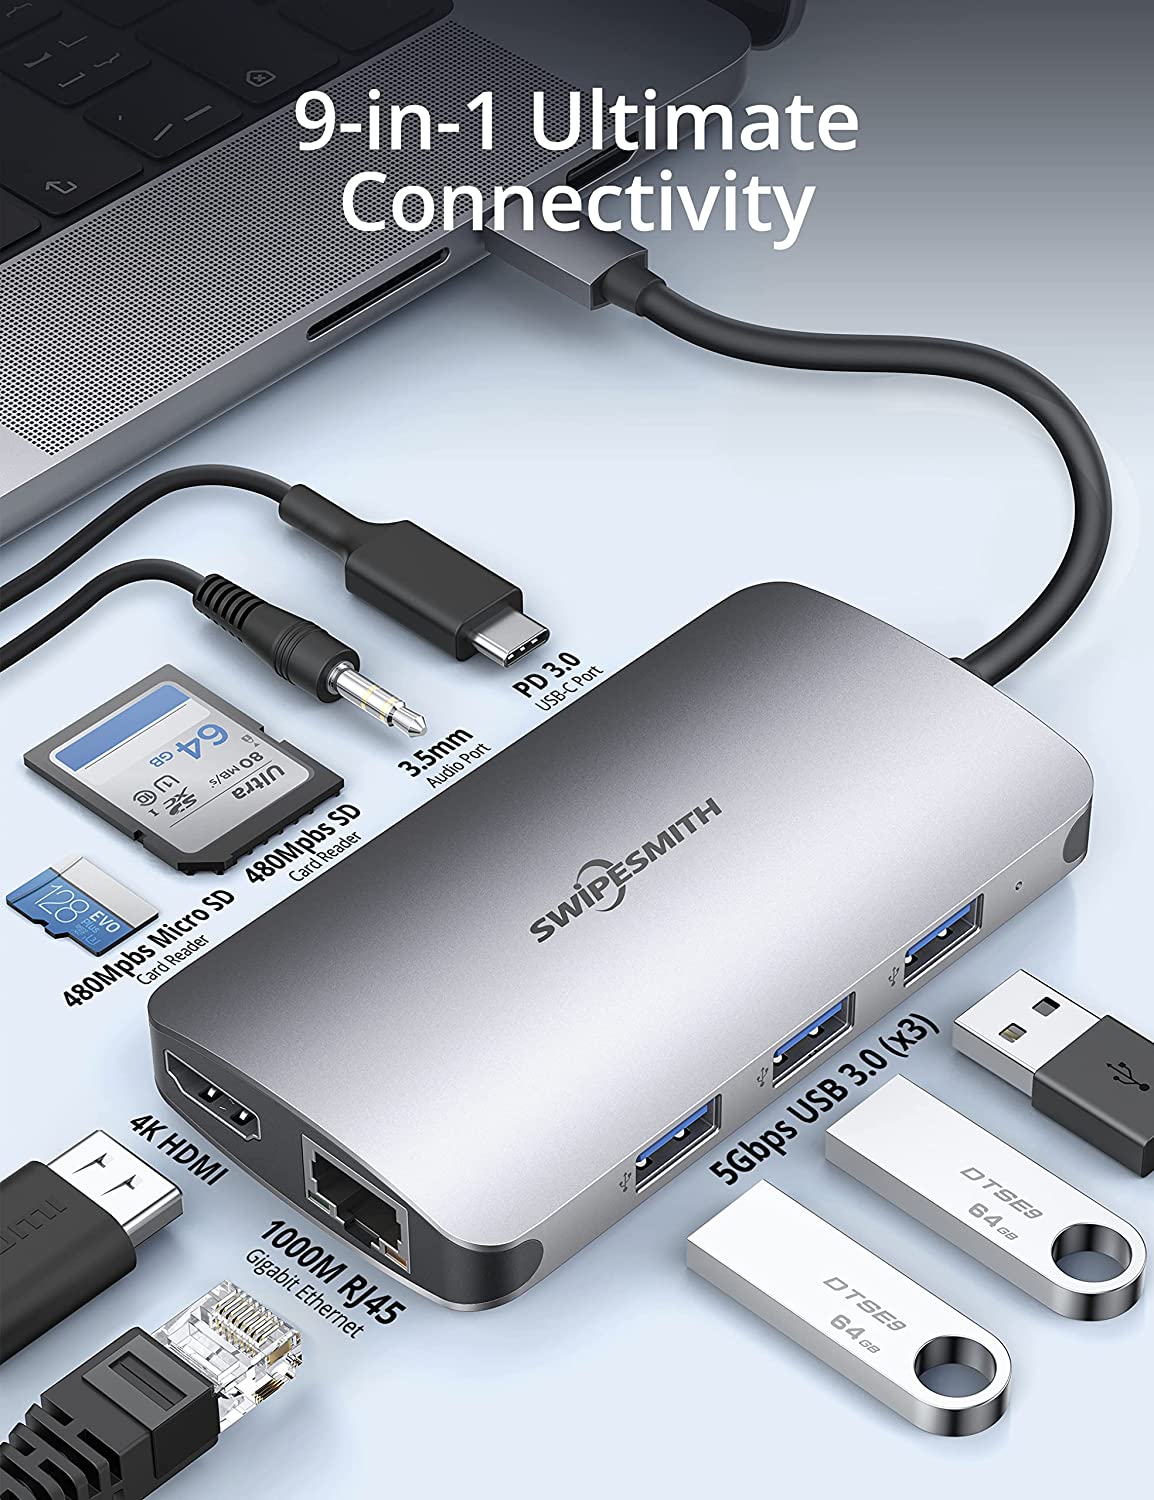 5-in-1 Multiport USB-C Adapter, USB-C Hub, 4K HDMI